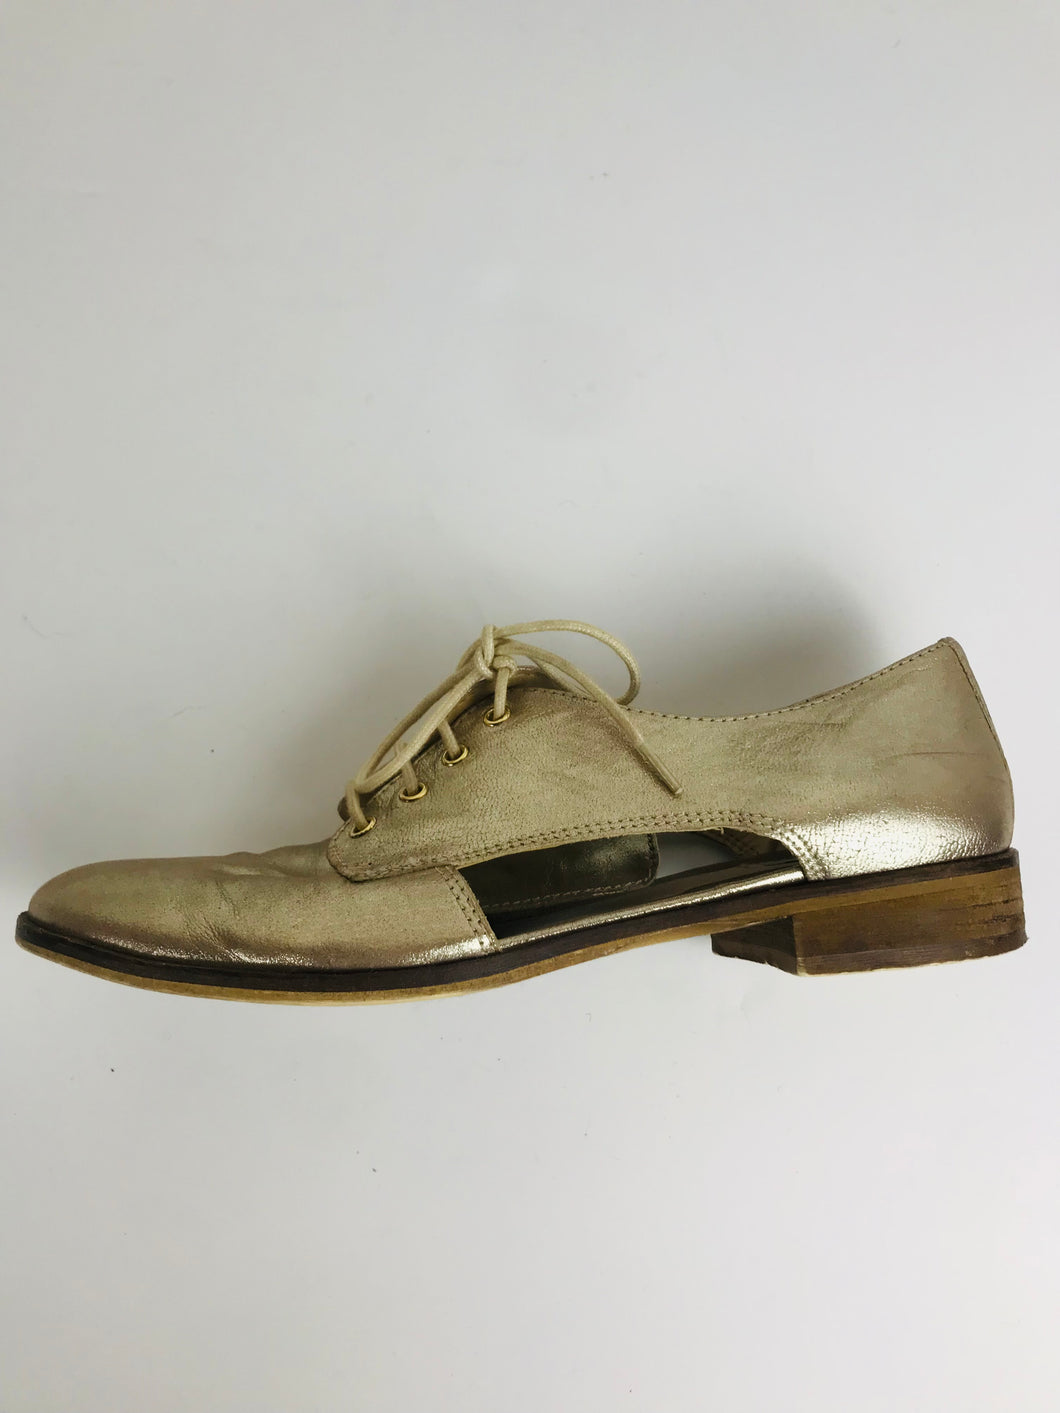 Clarks Women's Metallic Cutout Flats Shoes | UK6 | Beige